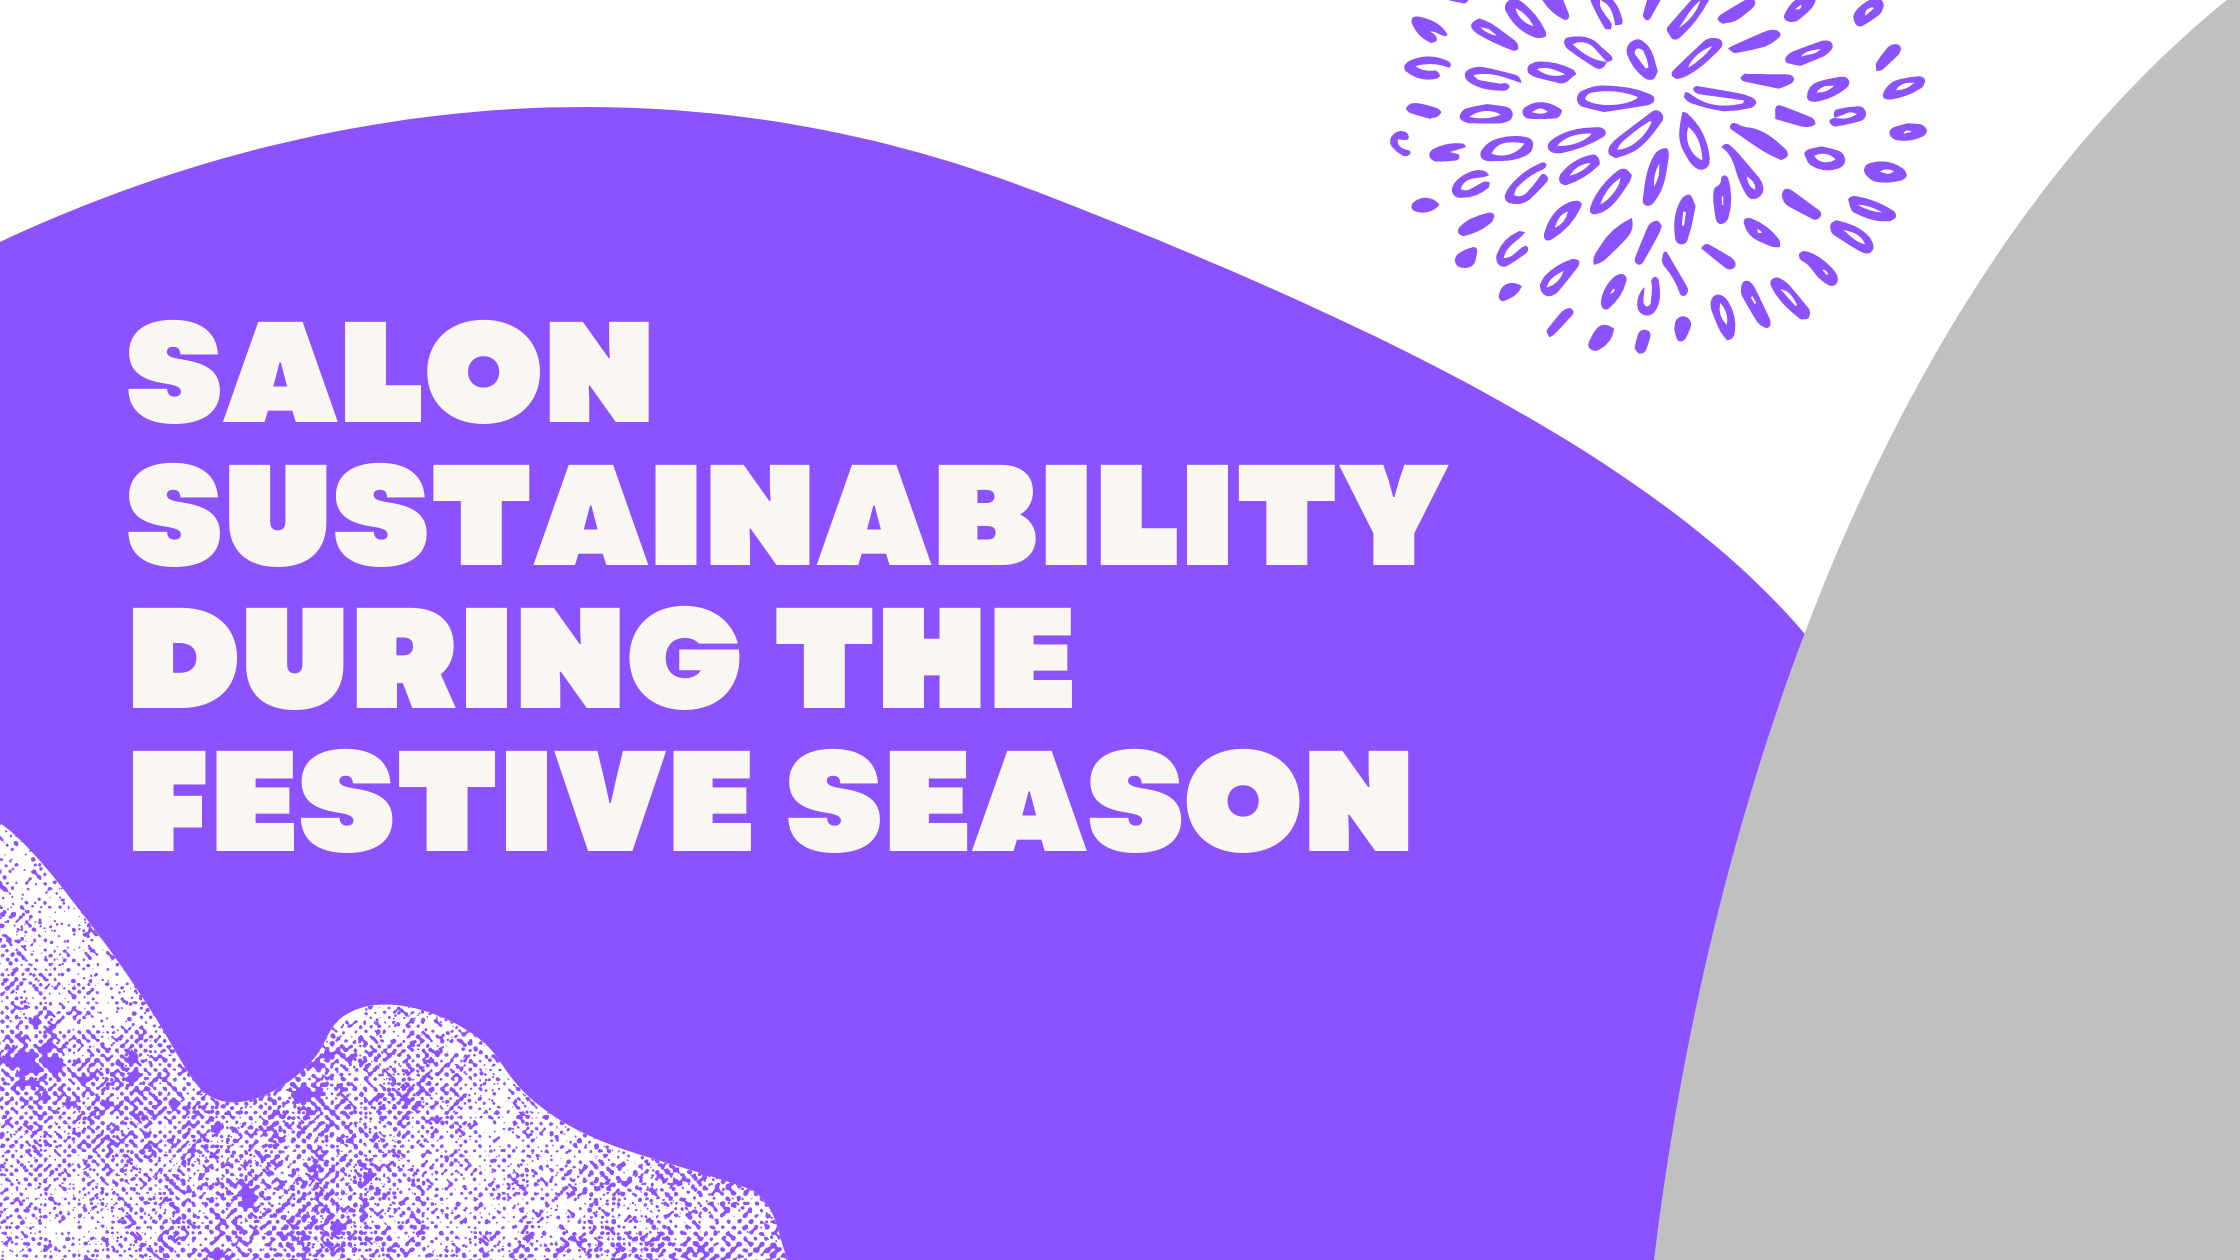 Salon Sustainability During the Festive Season